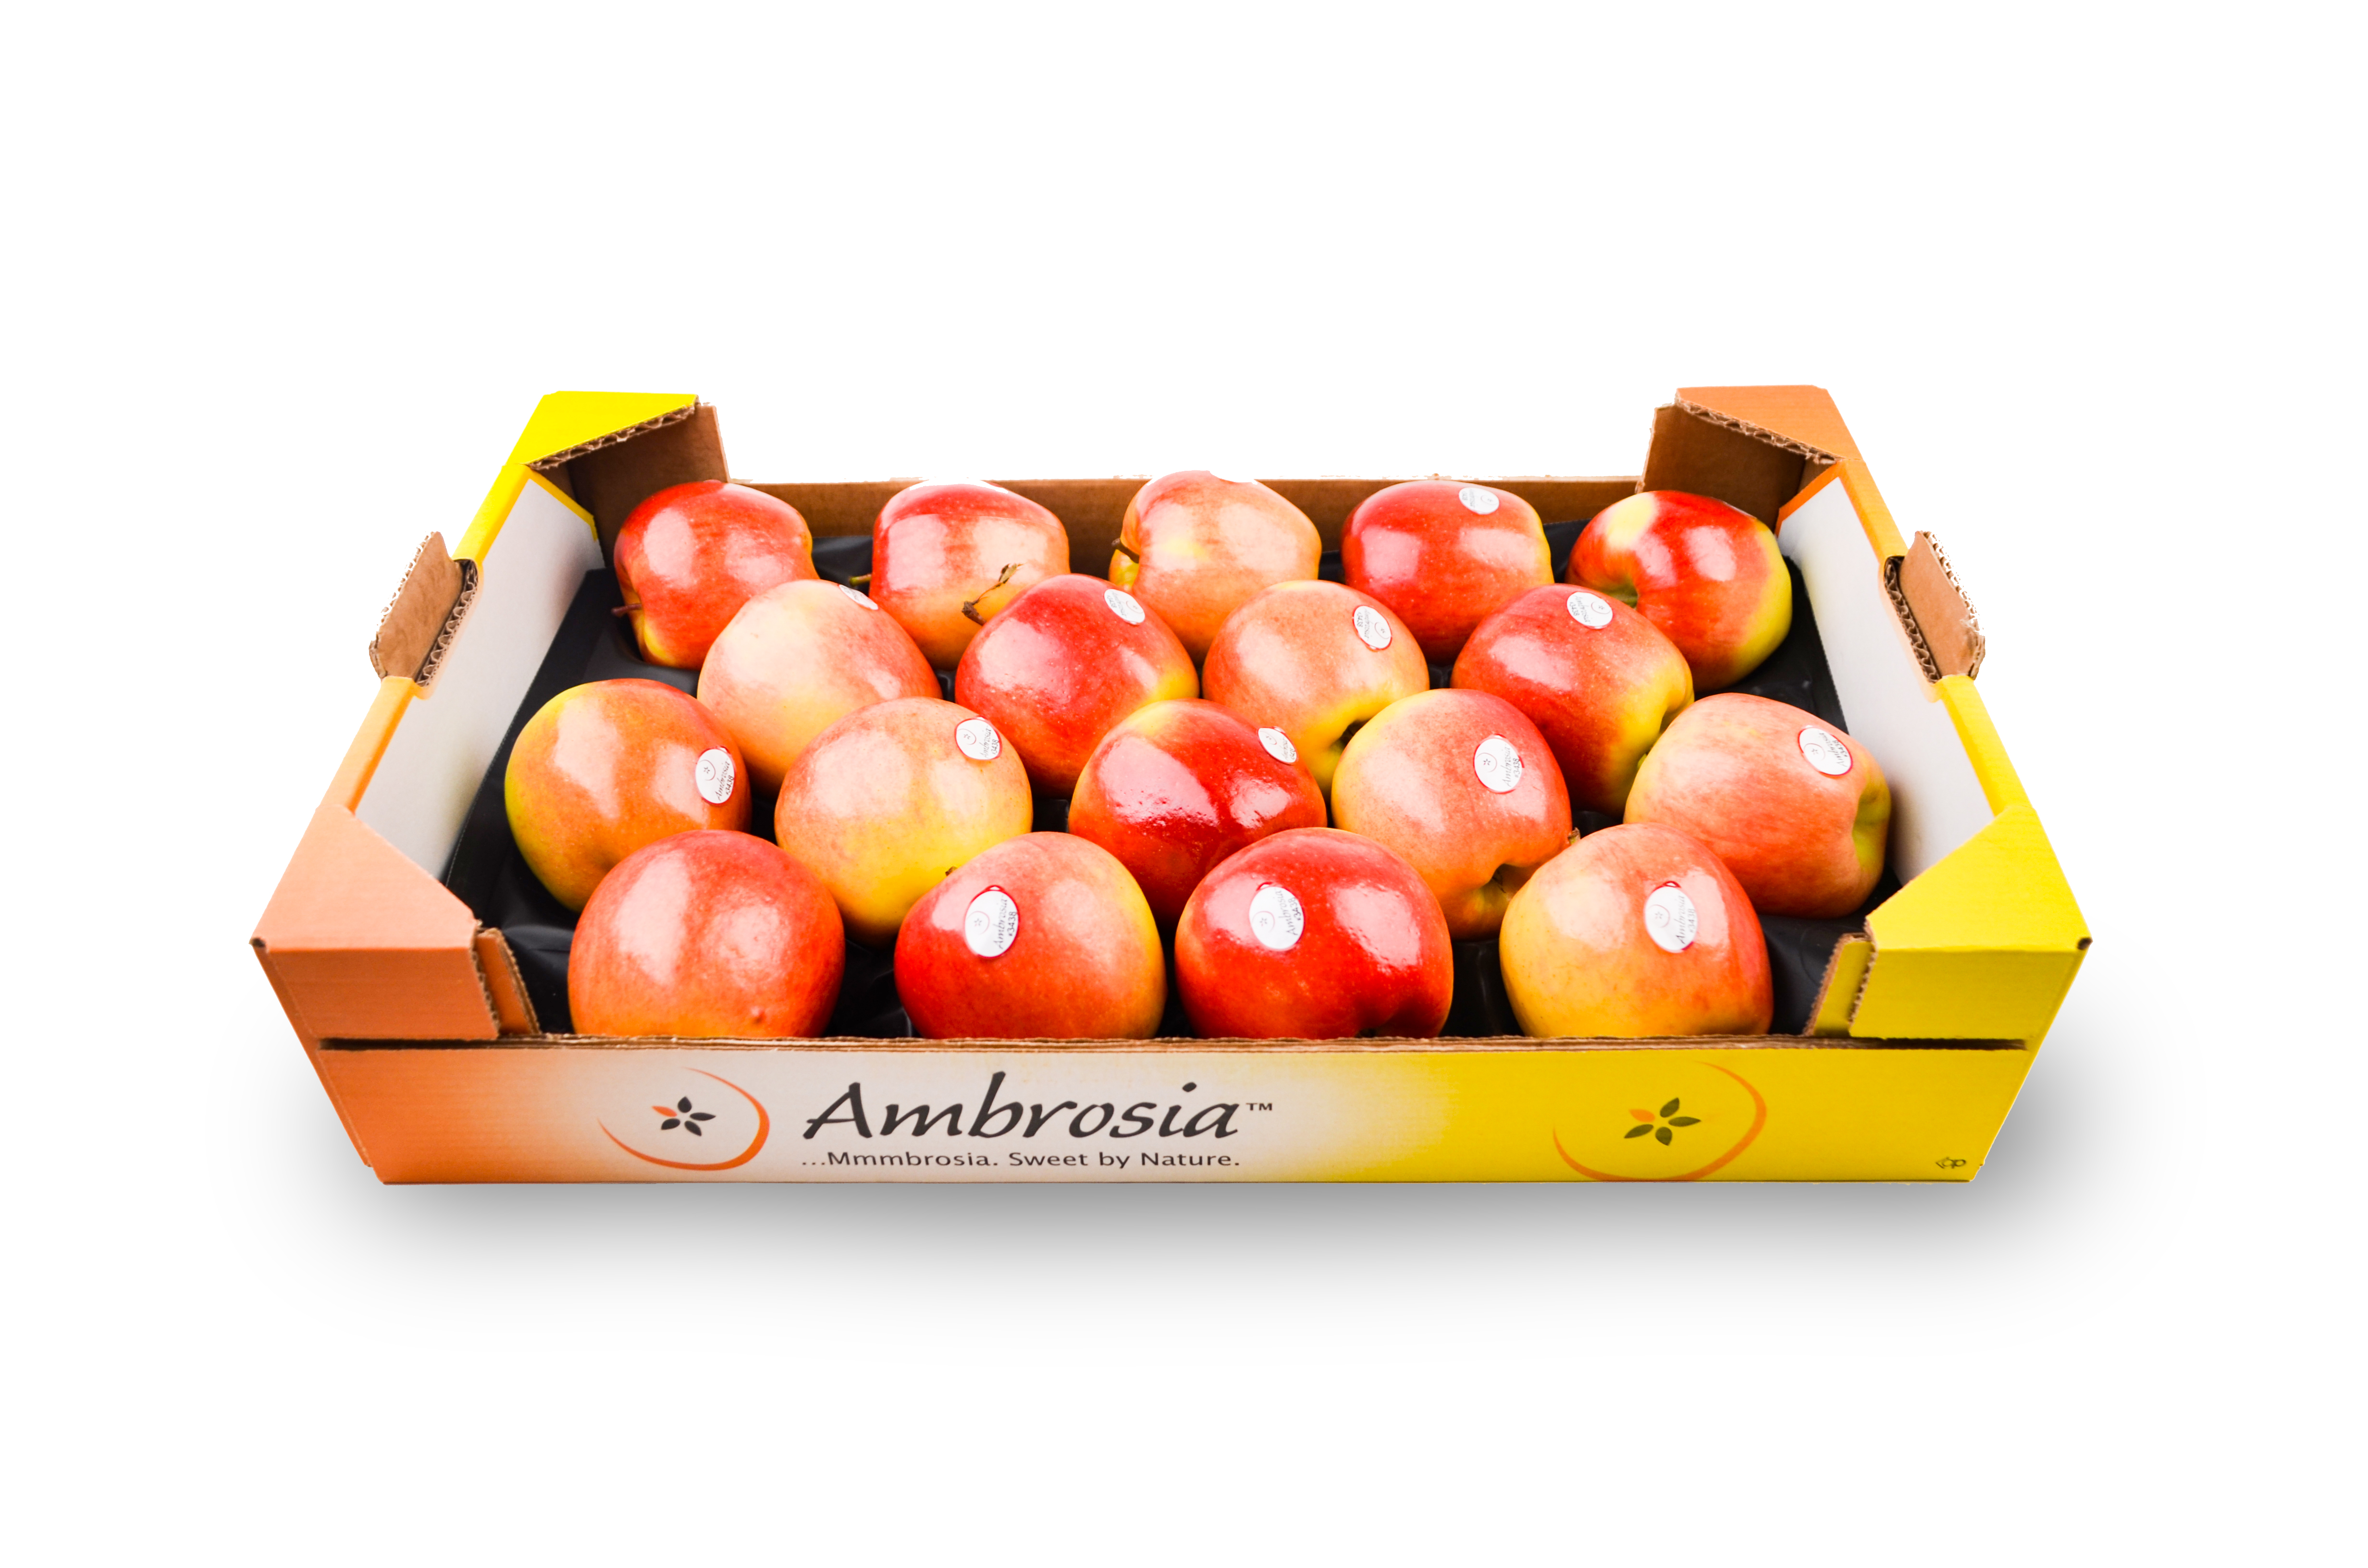 Apfel Ambrosia